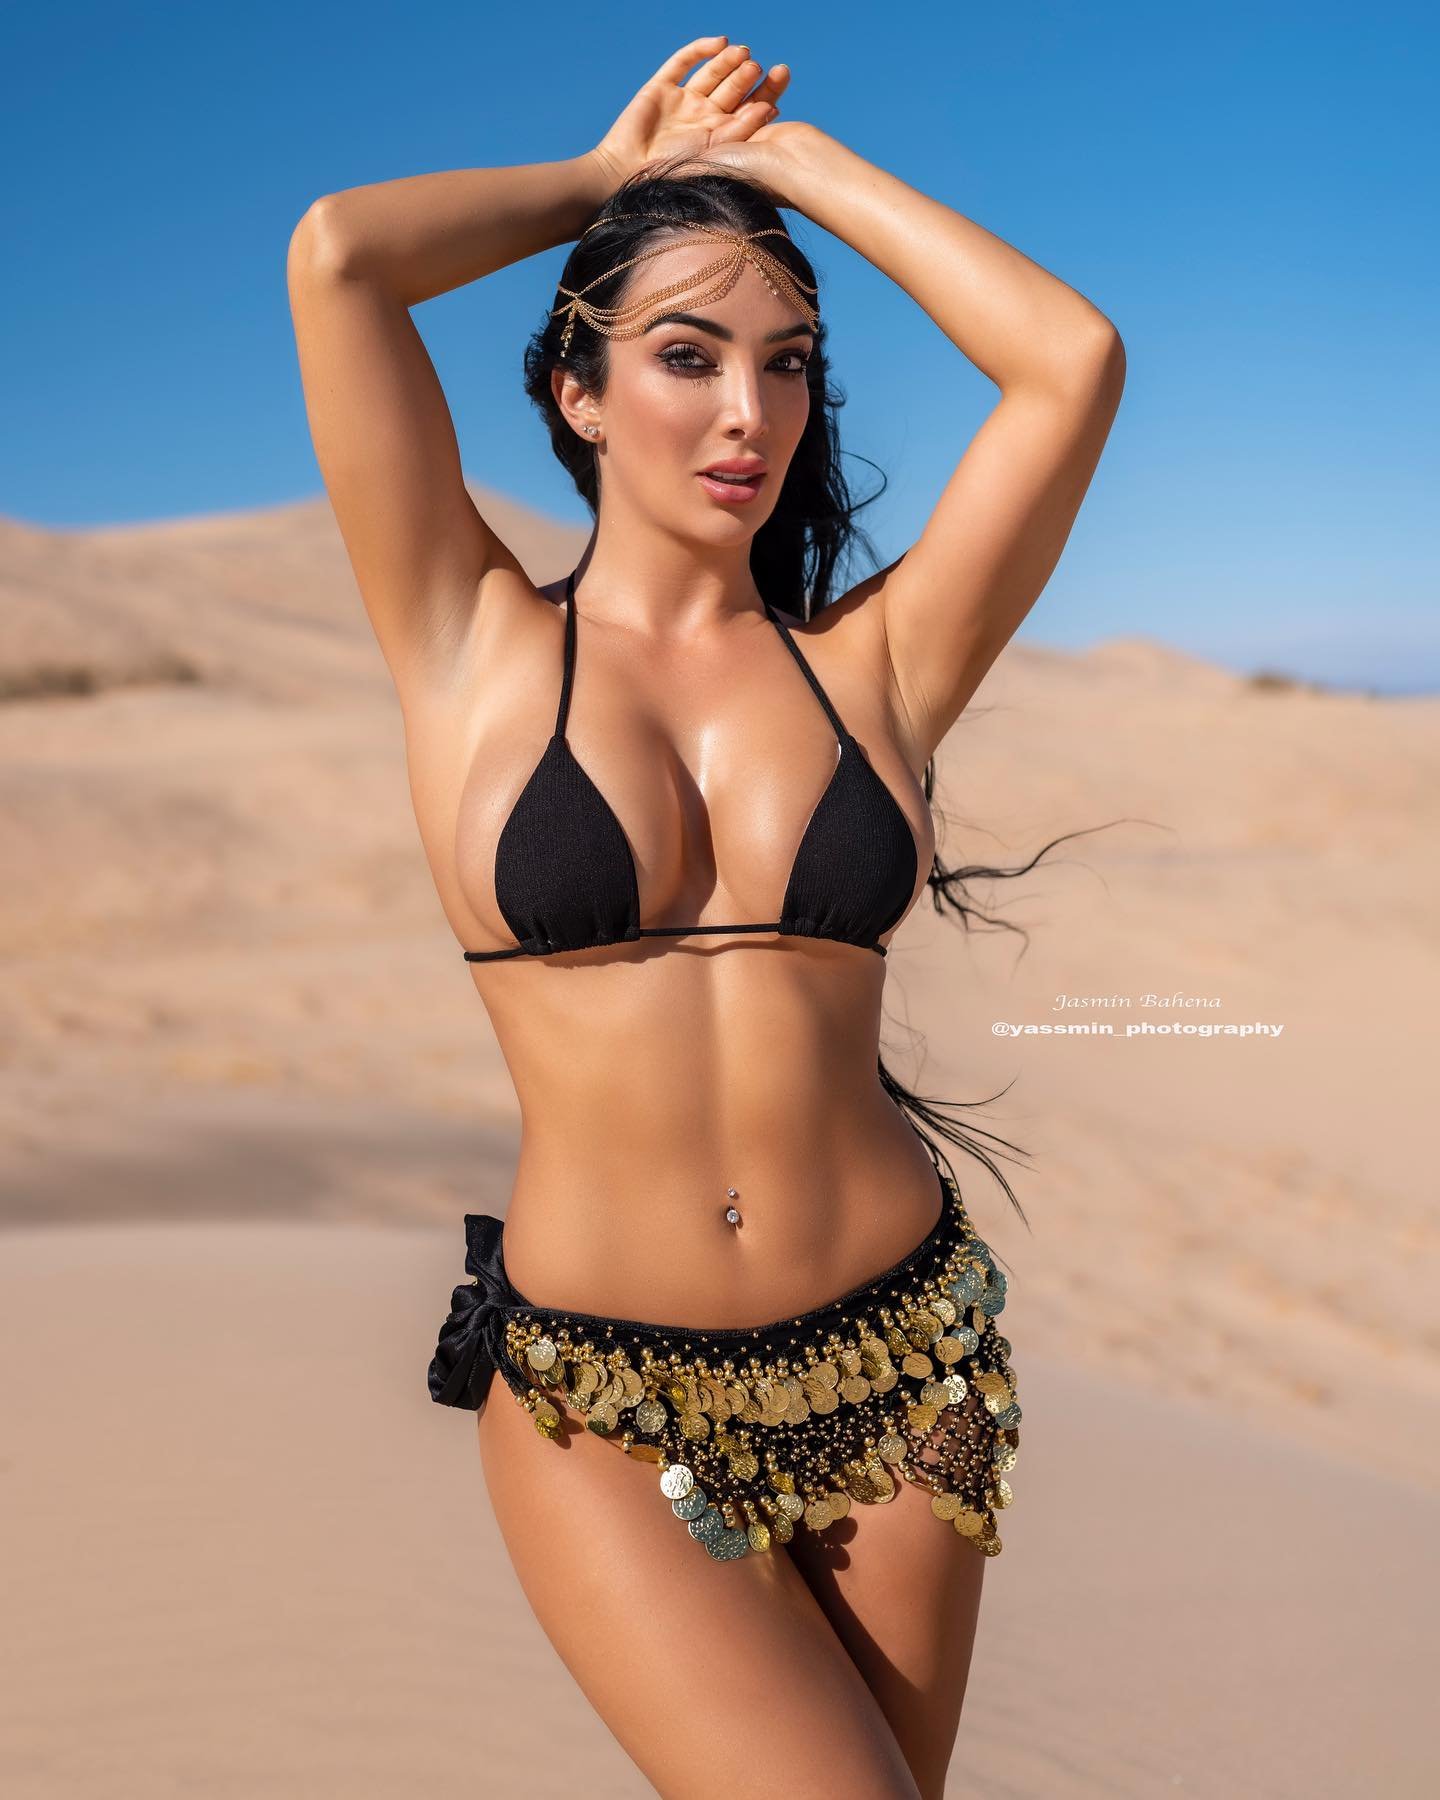 Jasmin Bahena - Yassmin fotografa modelo morena de biquini no deserto